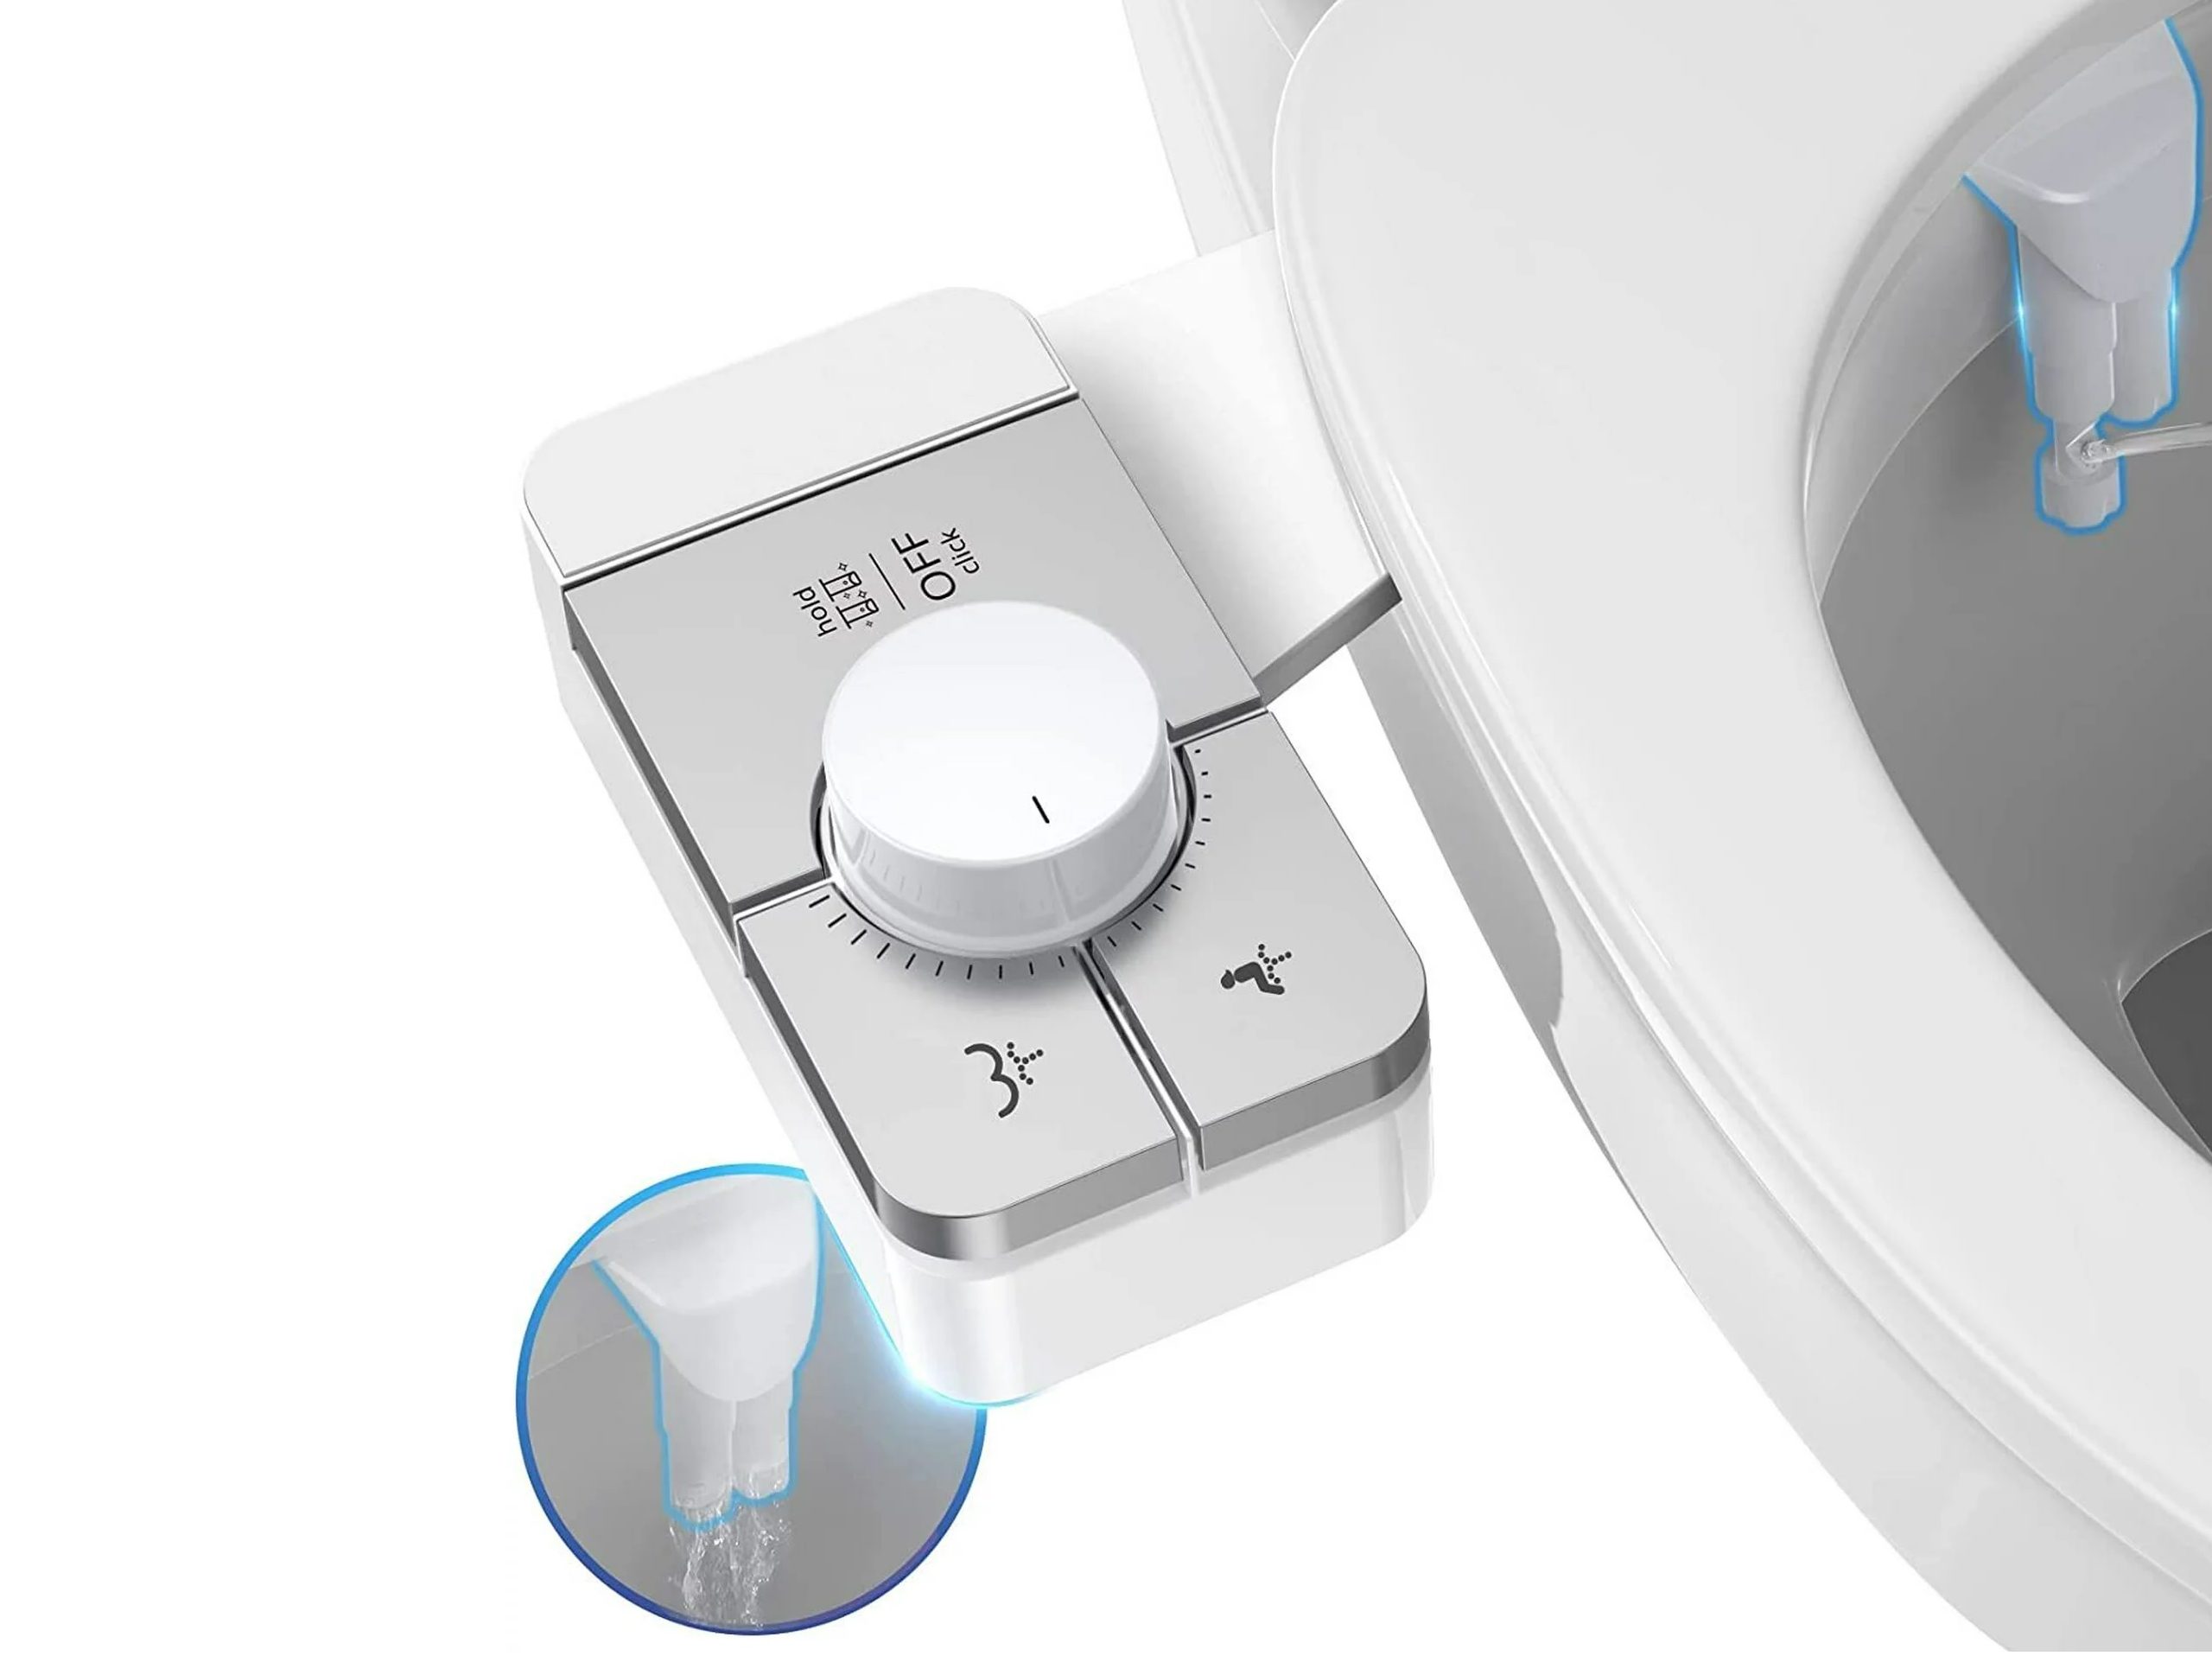 SAMODRA Bidet Attachment, Non-Electric Toilet Bidet Seat with Adjustable  Water Pressure